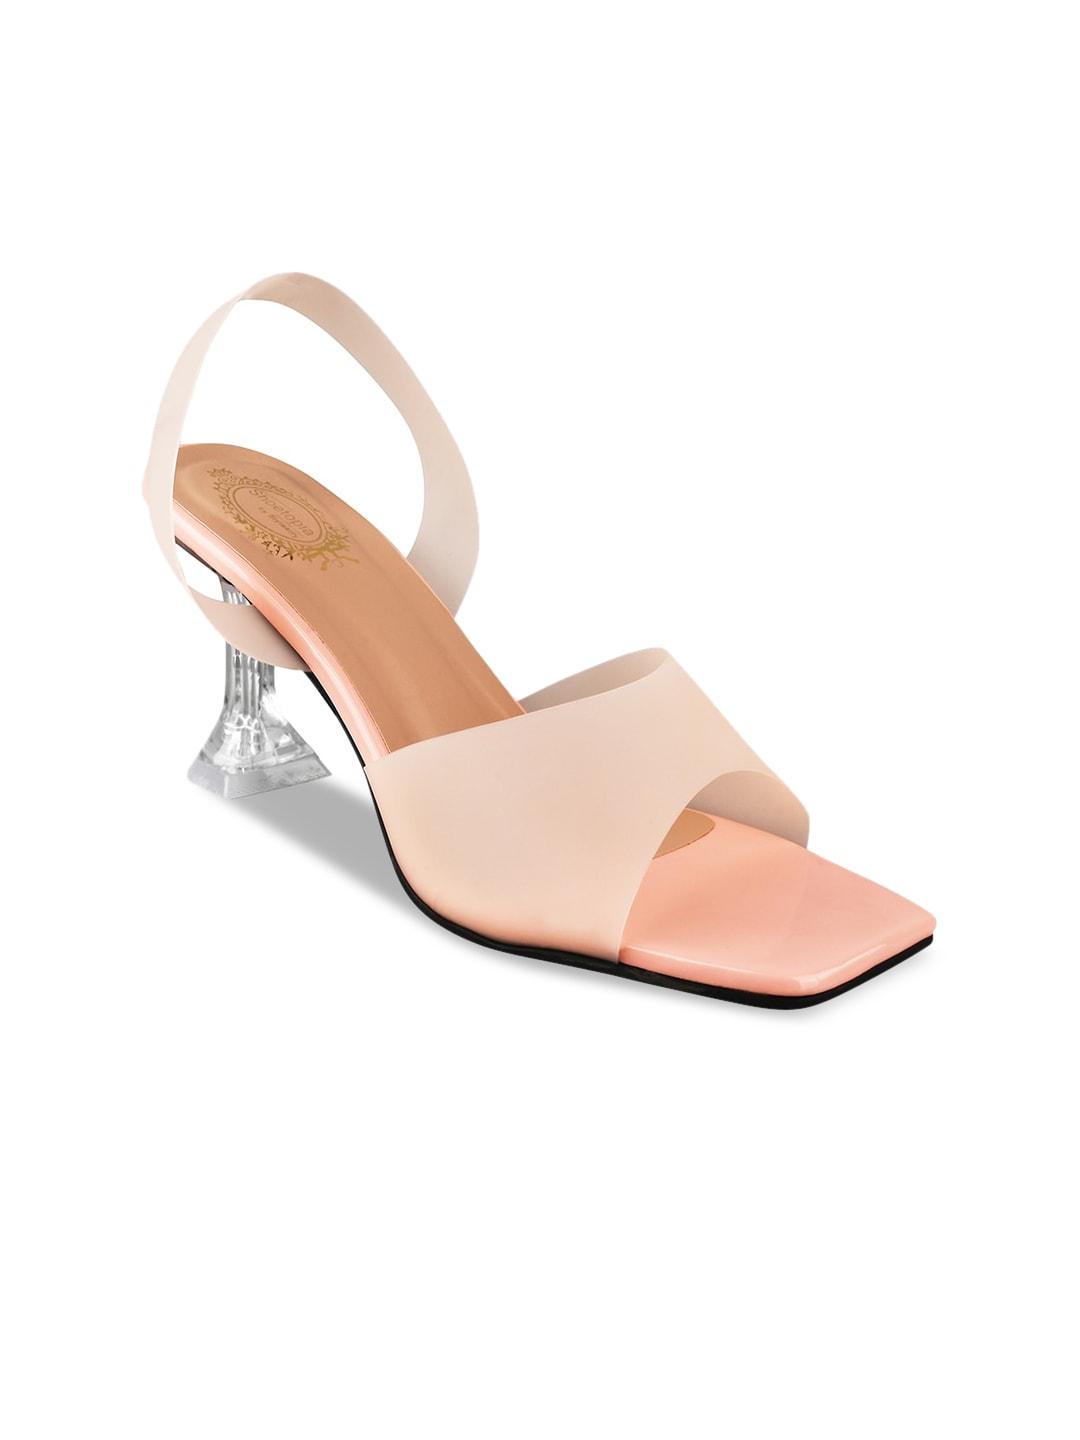 shoetopia-guru-open-toe-block-heels-with-backstrap